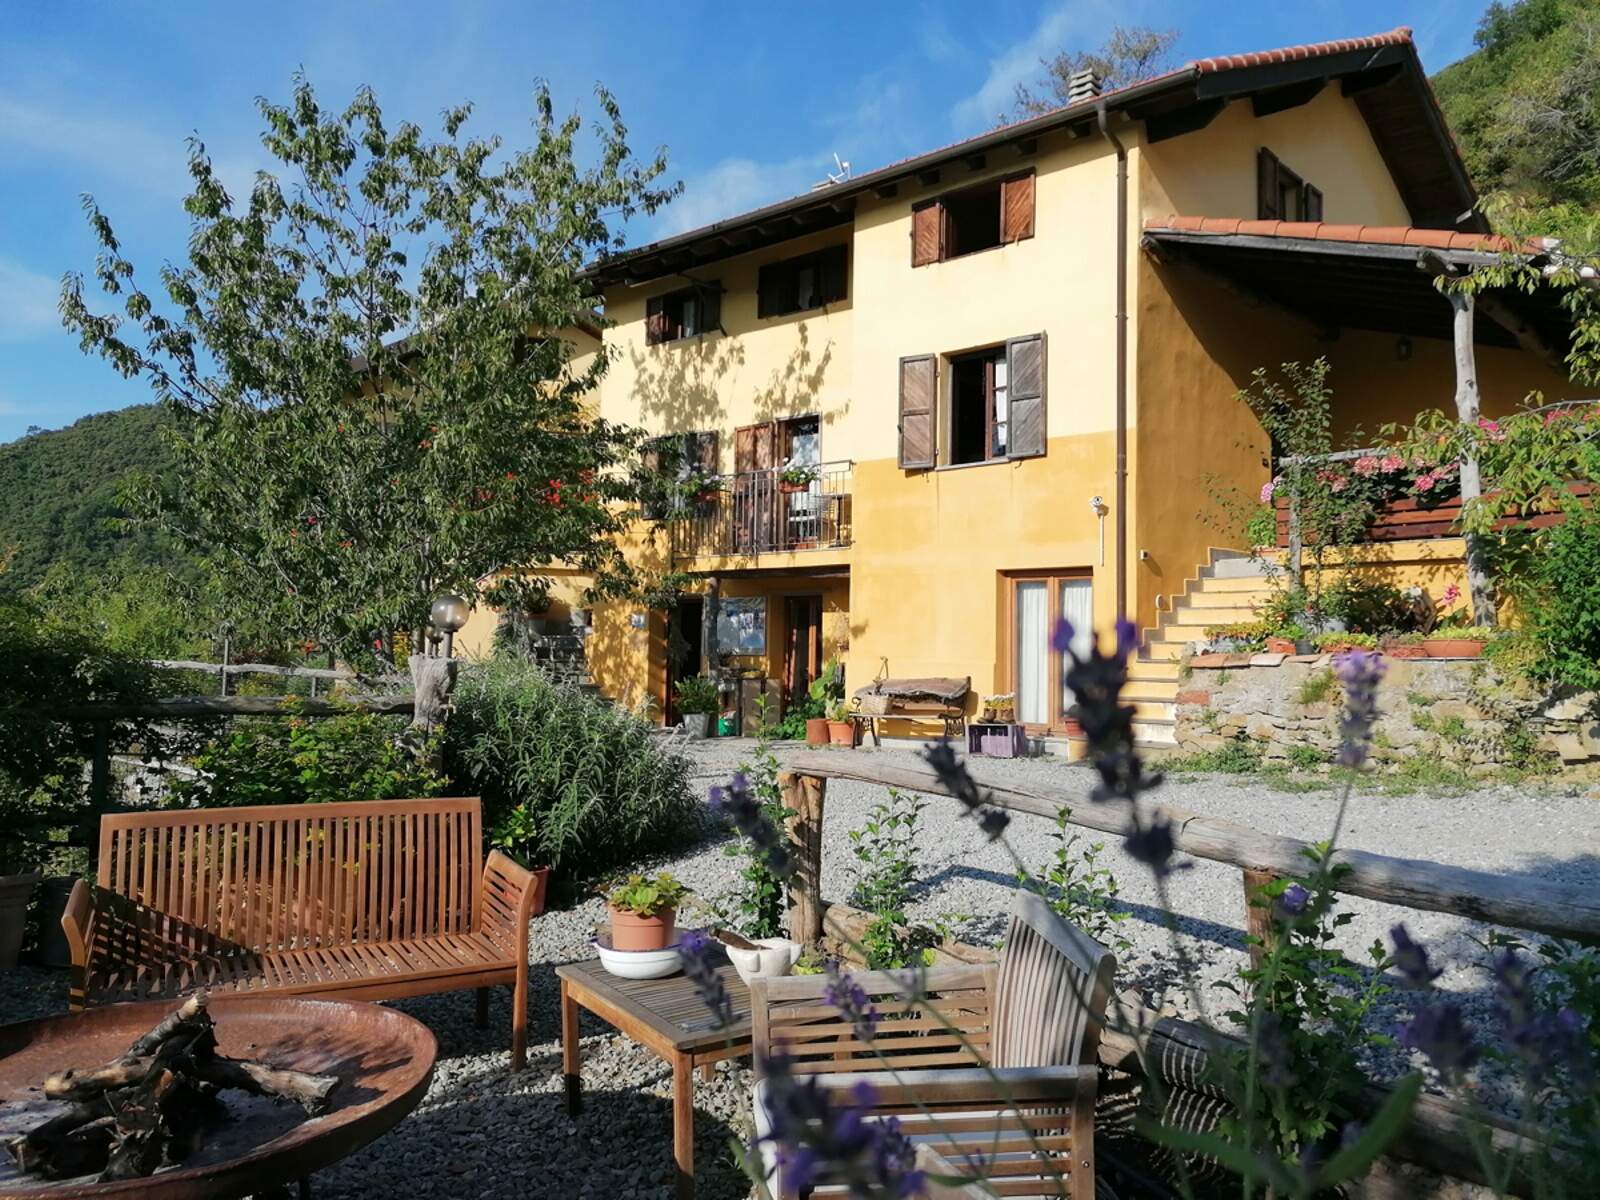 wellness area - Fire pit - apartments in farmhouse in Pigna - Imperia - Liguria